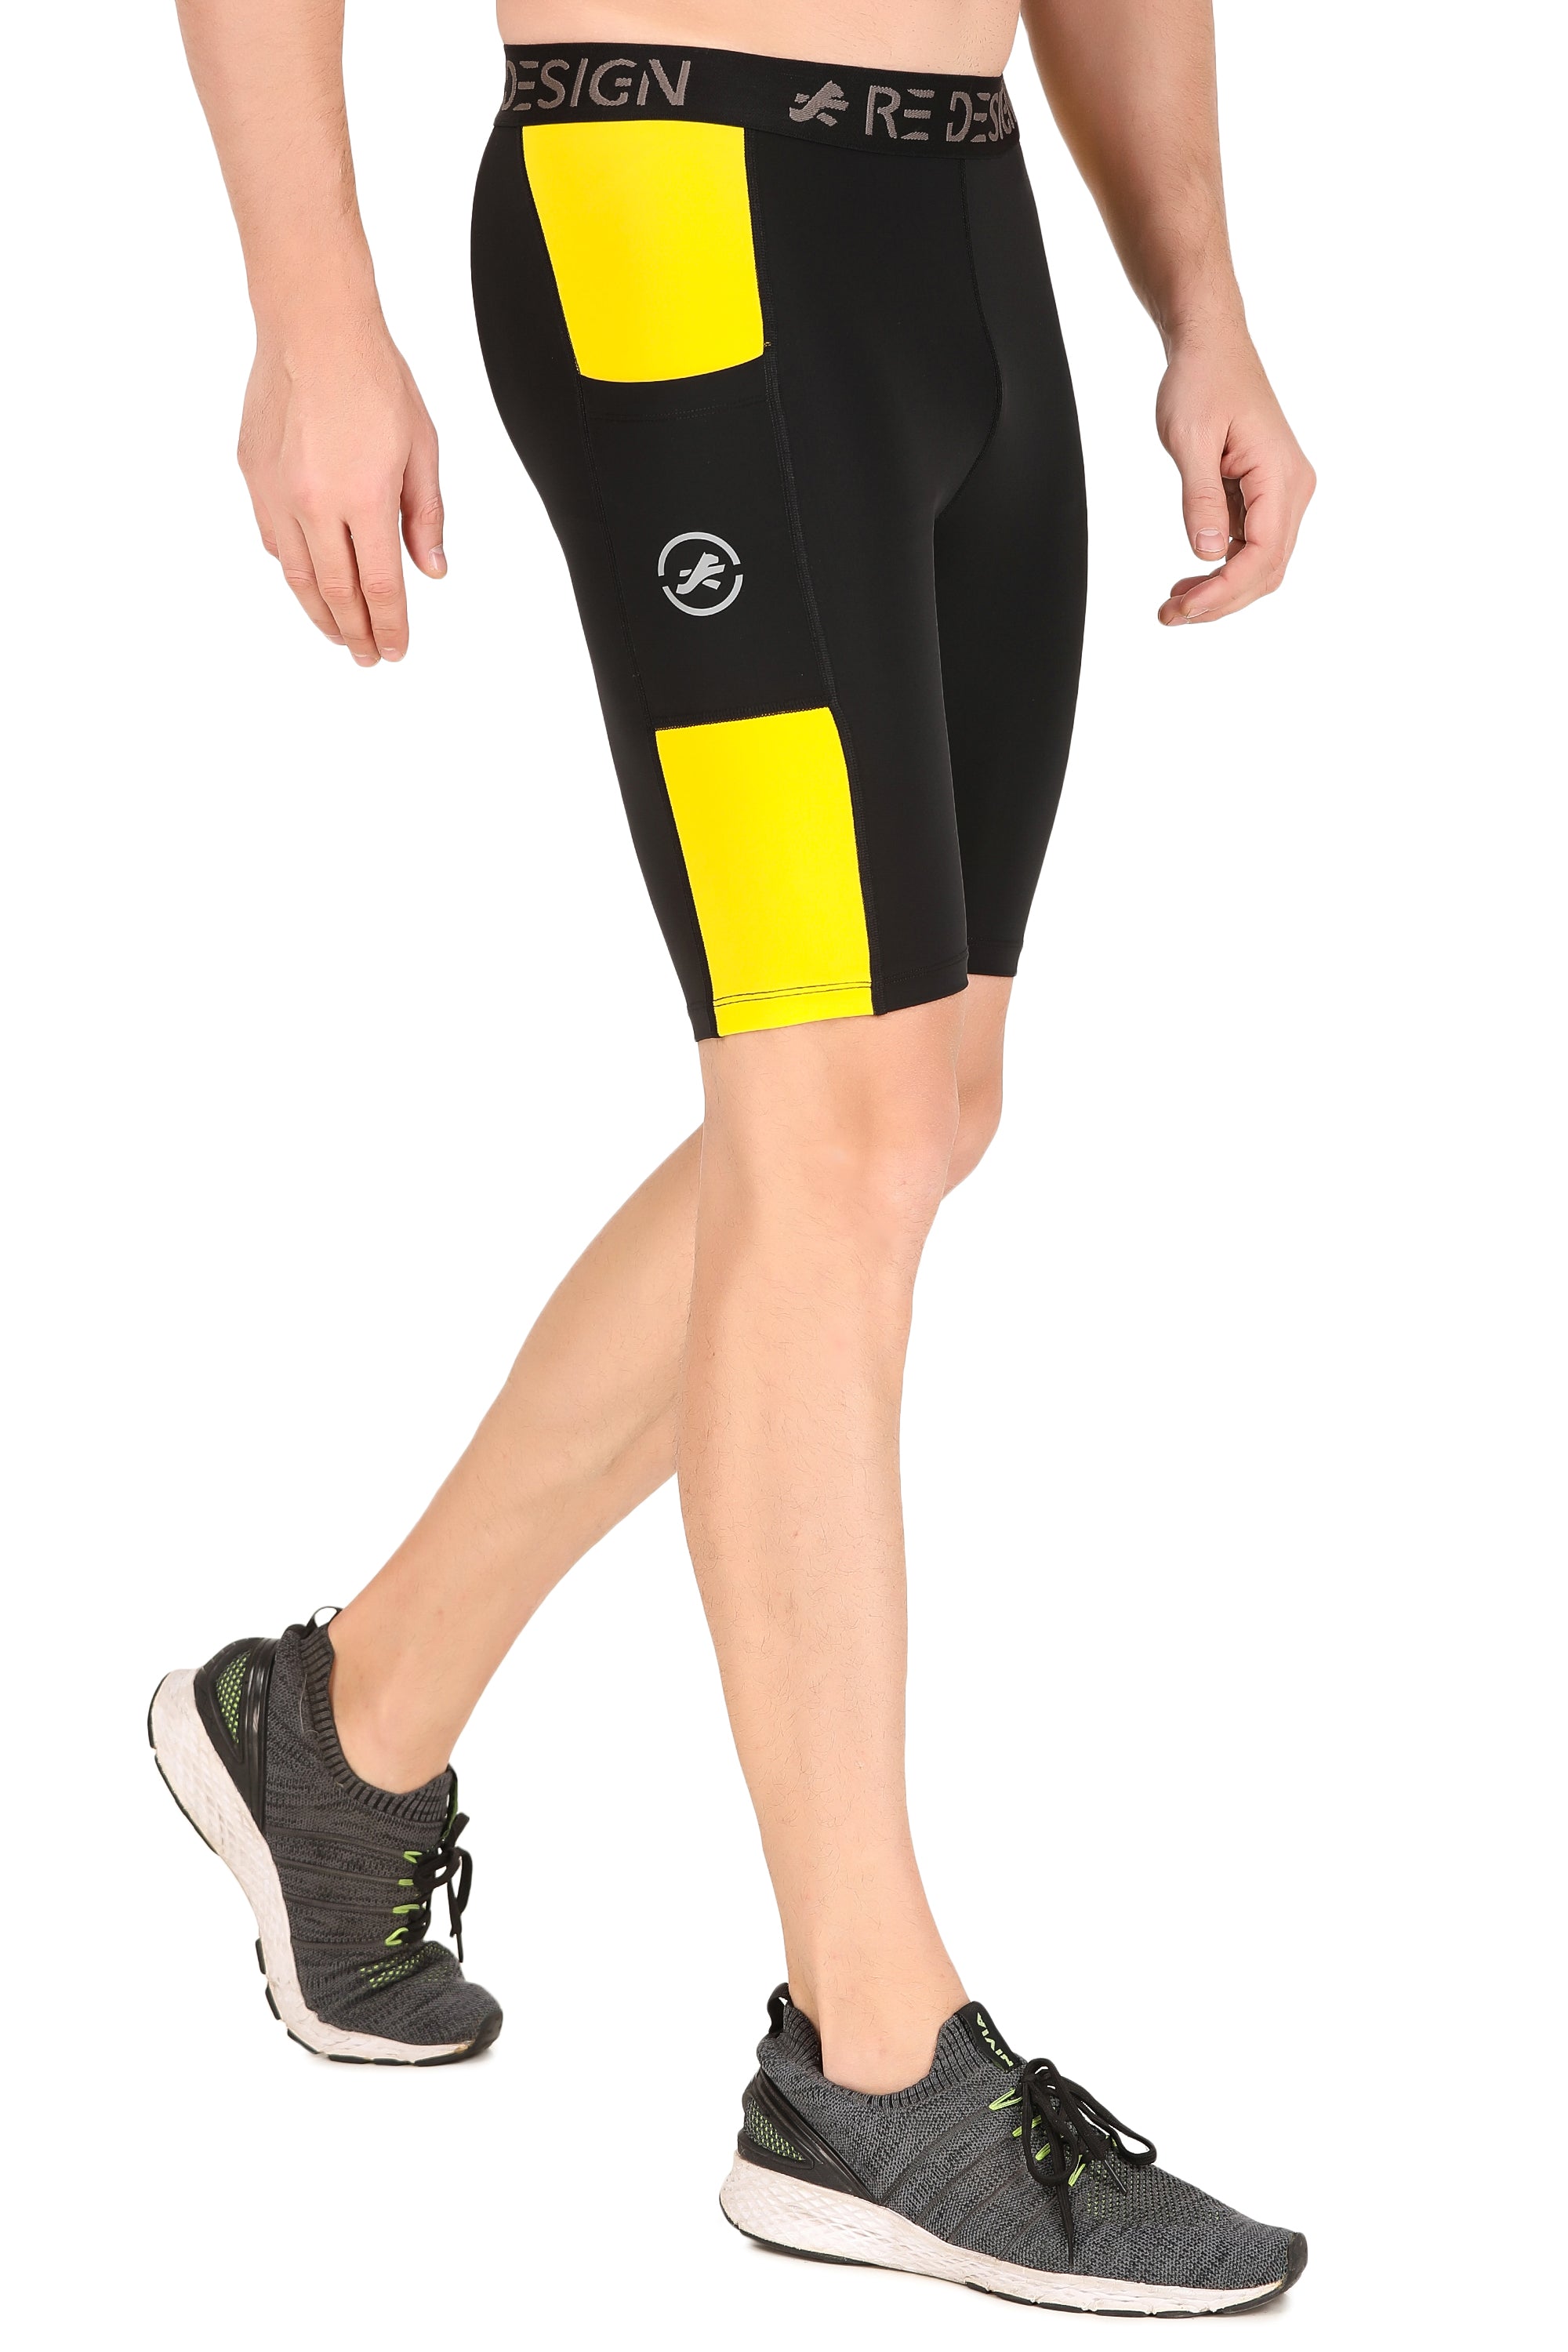 Men's Nylon DC Pocket Compression Shorts and Half Tights (Black/Yellow)